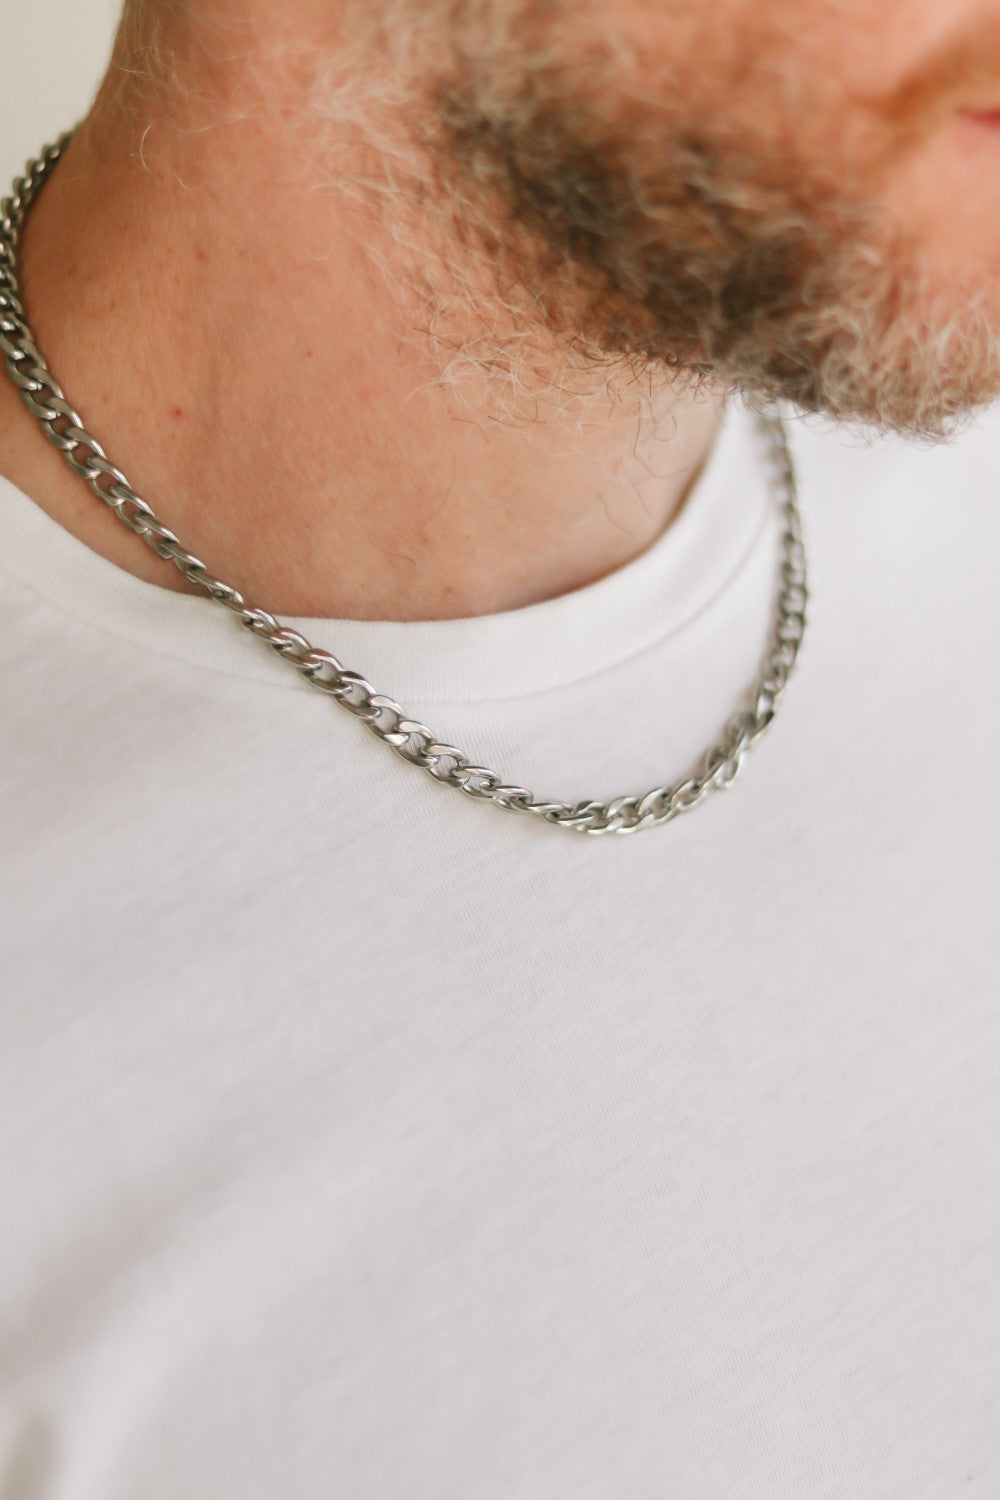  Silver links chain necklace for men, men's necklace